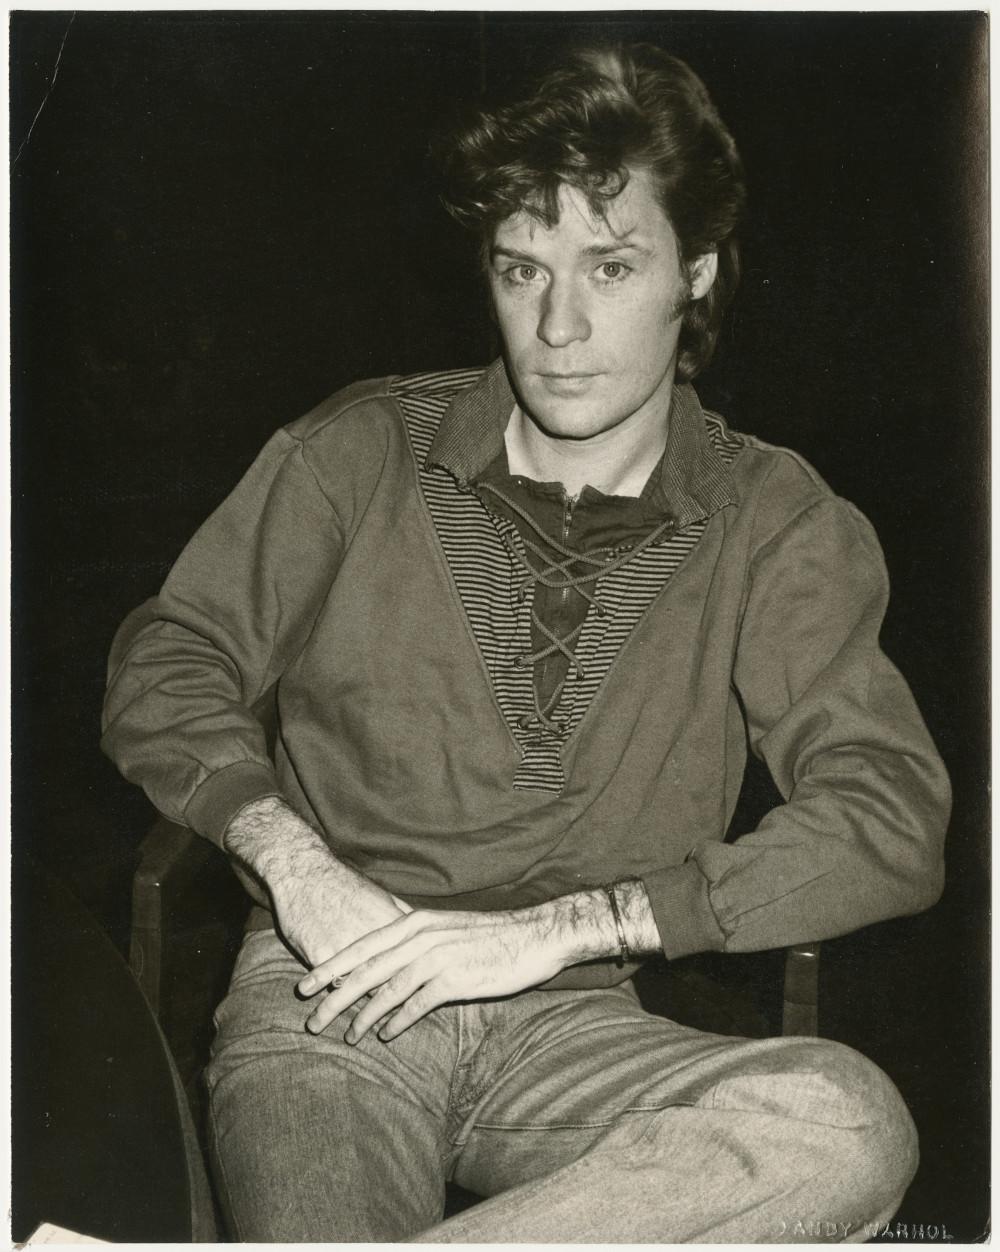 Andy Warhol Portrait Photograph - Daryl Hall